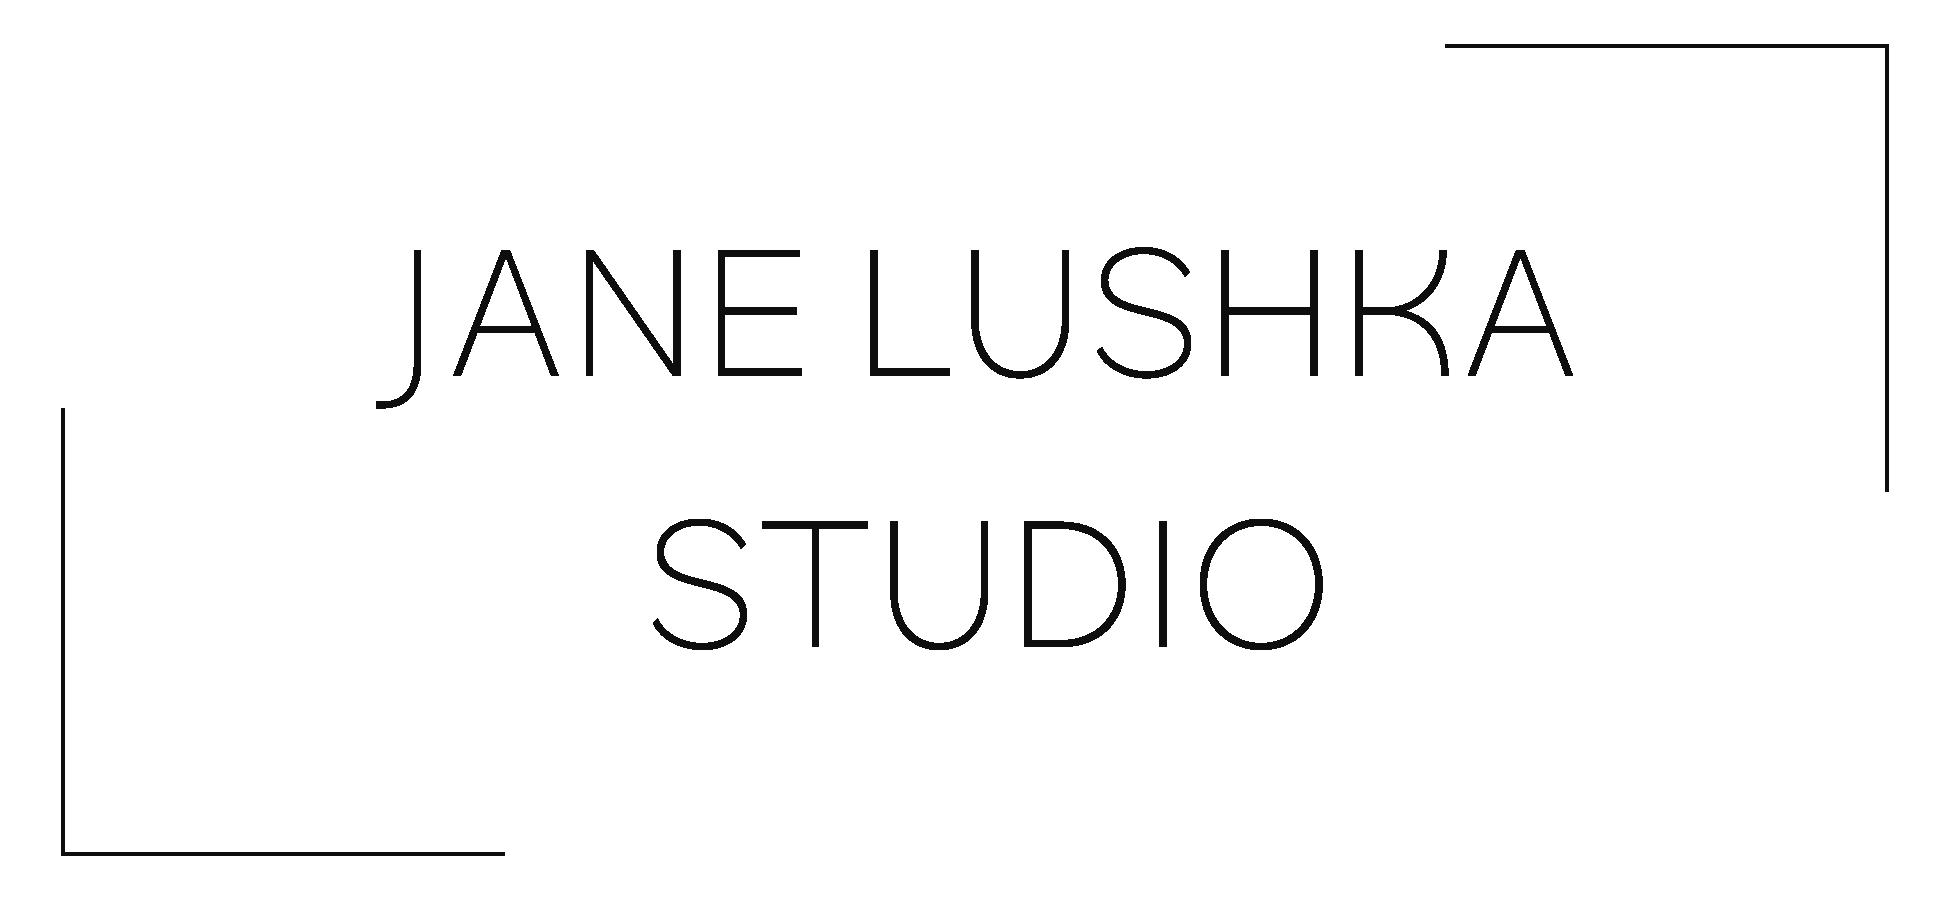 Jane Lushka Logo